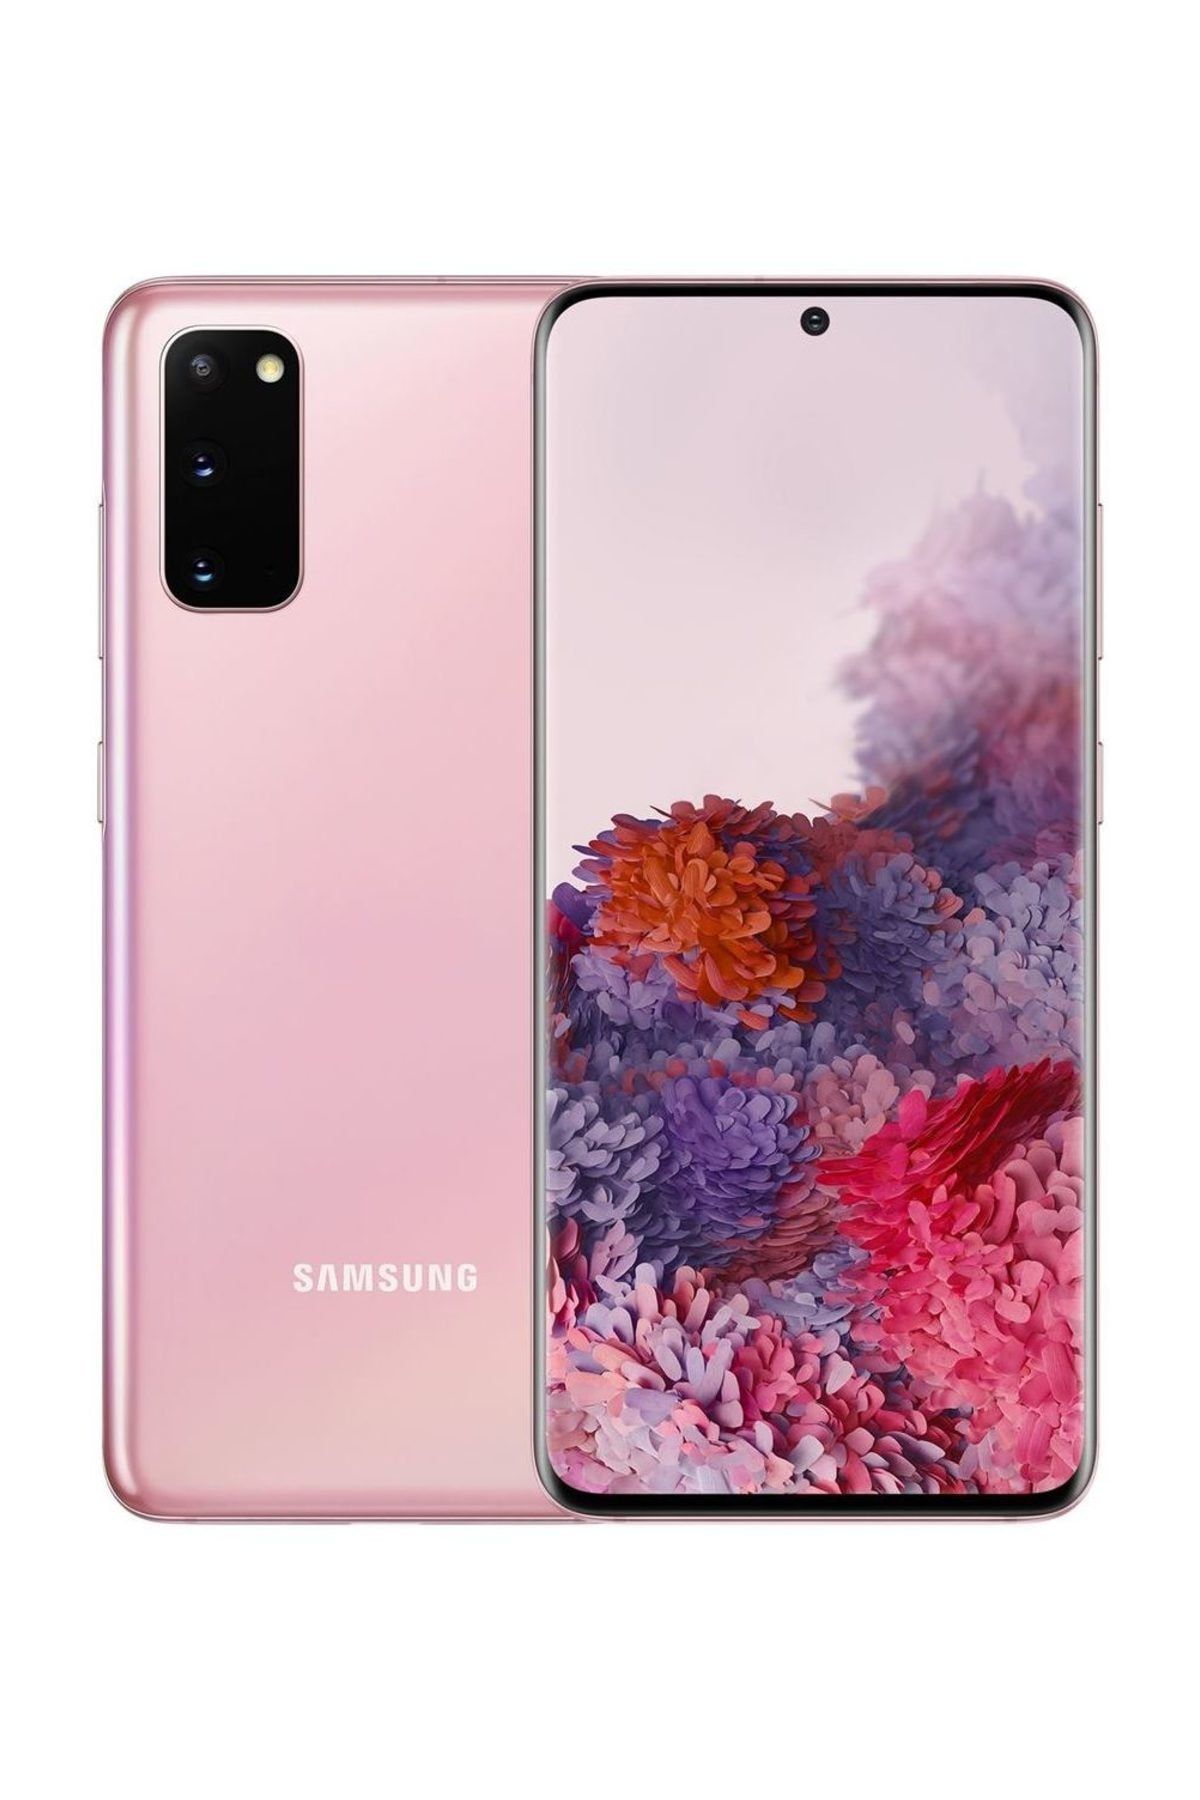 Samsung Galaxy S20 (Çift SIM) 128GB Kozmik Pembe Cep Telefonu (Samsung Türkiye Garantili)